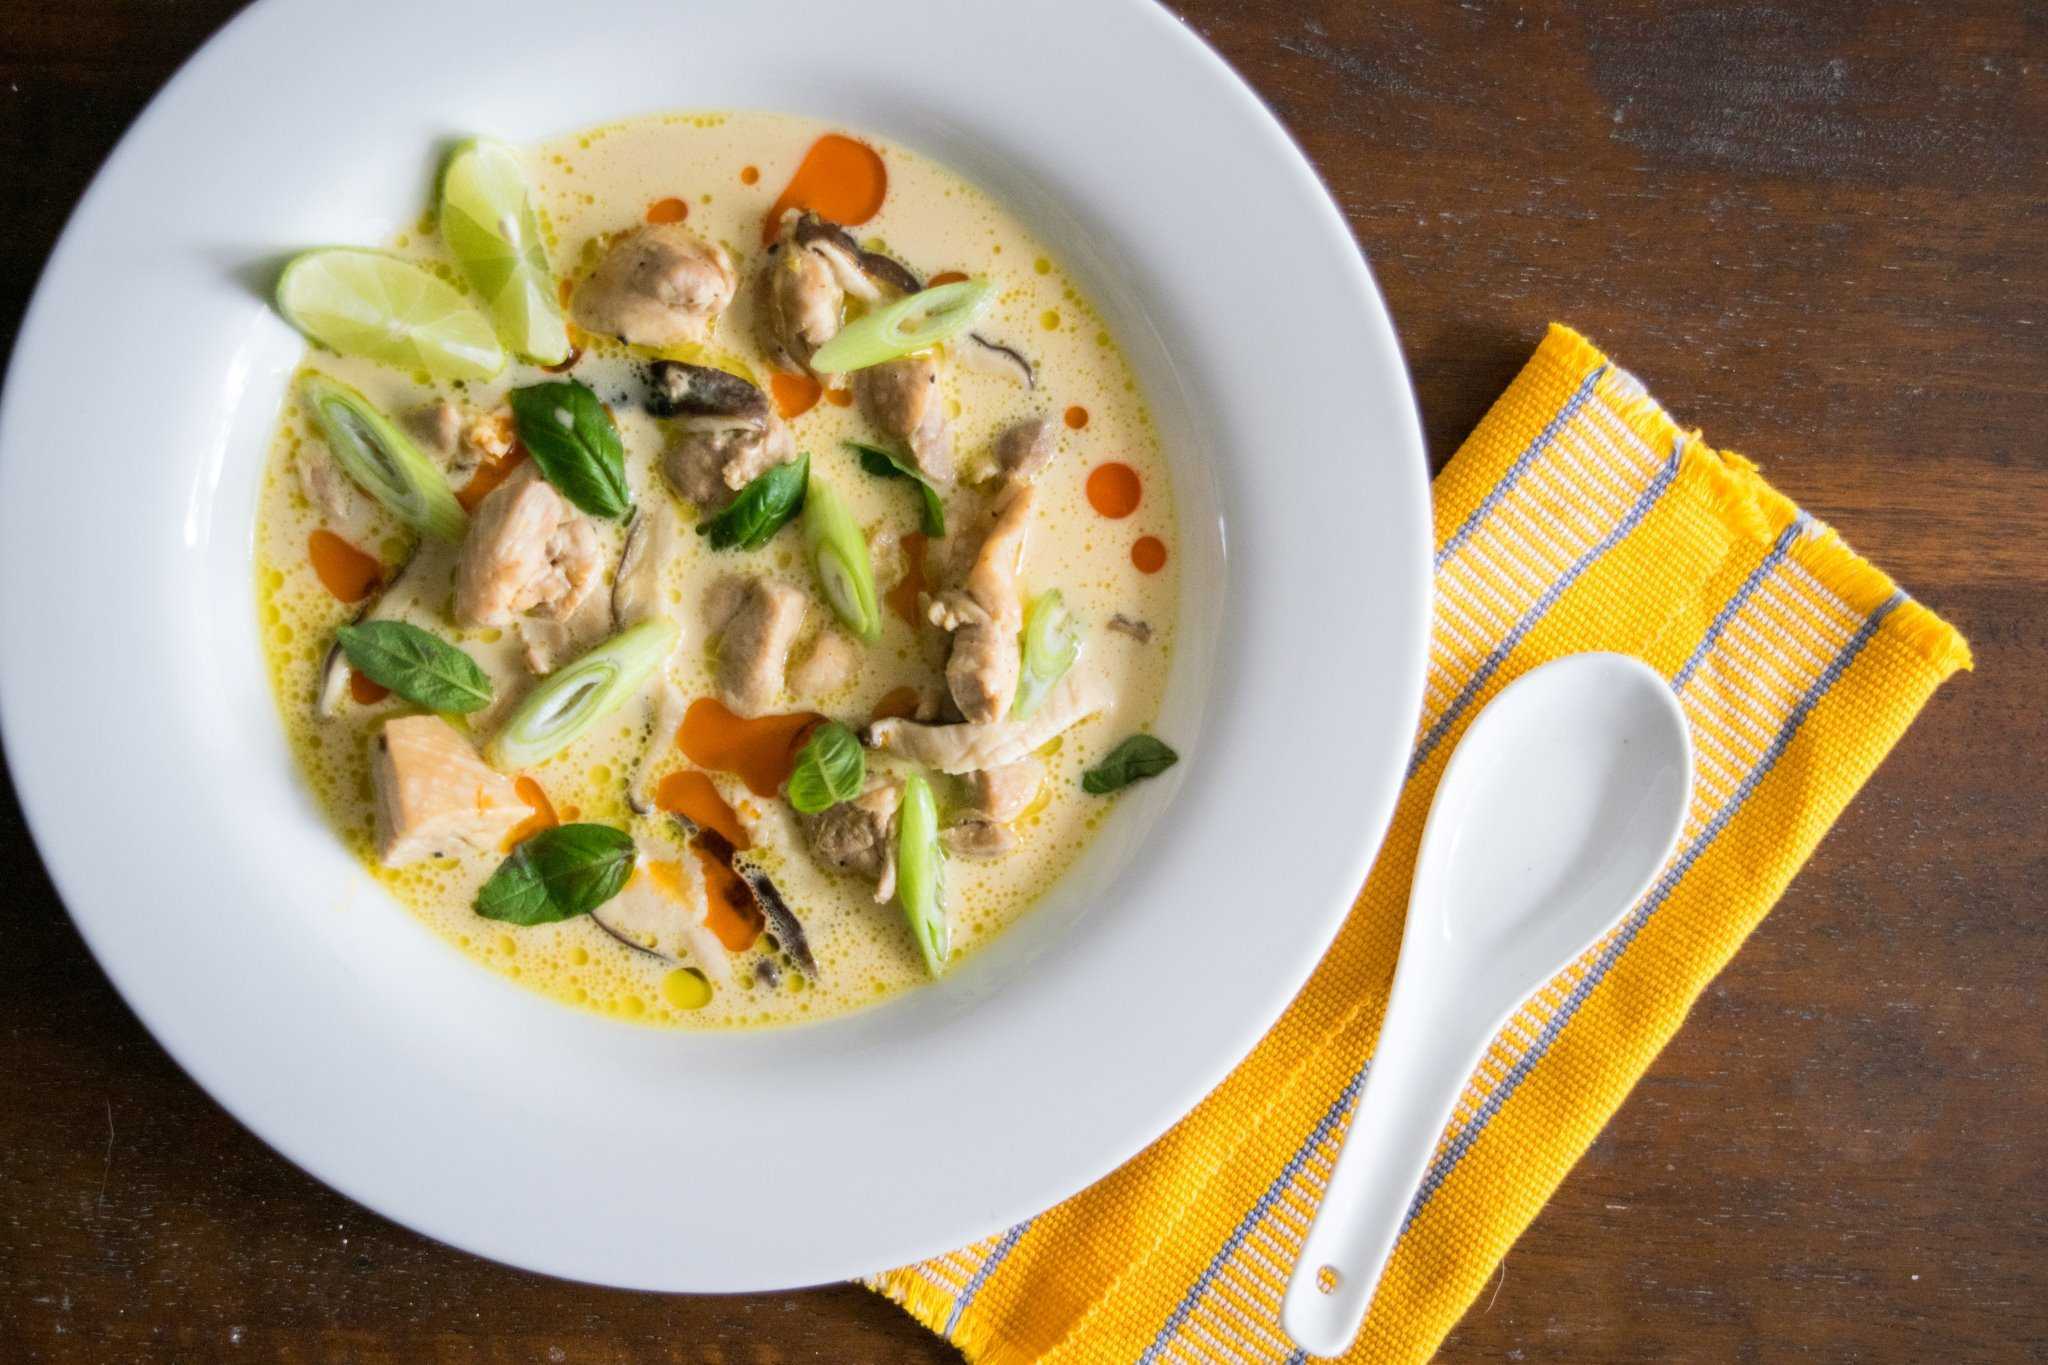 Тайский суп том ям в домашних условиях. классический рецепт tom yum с морепродуктами